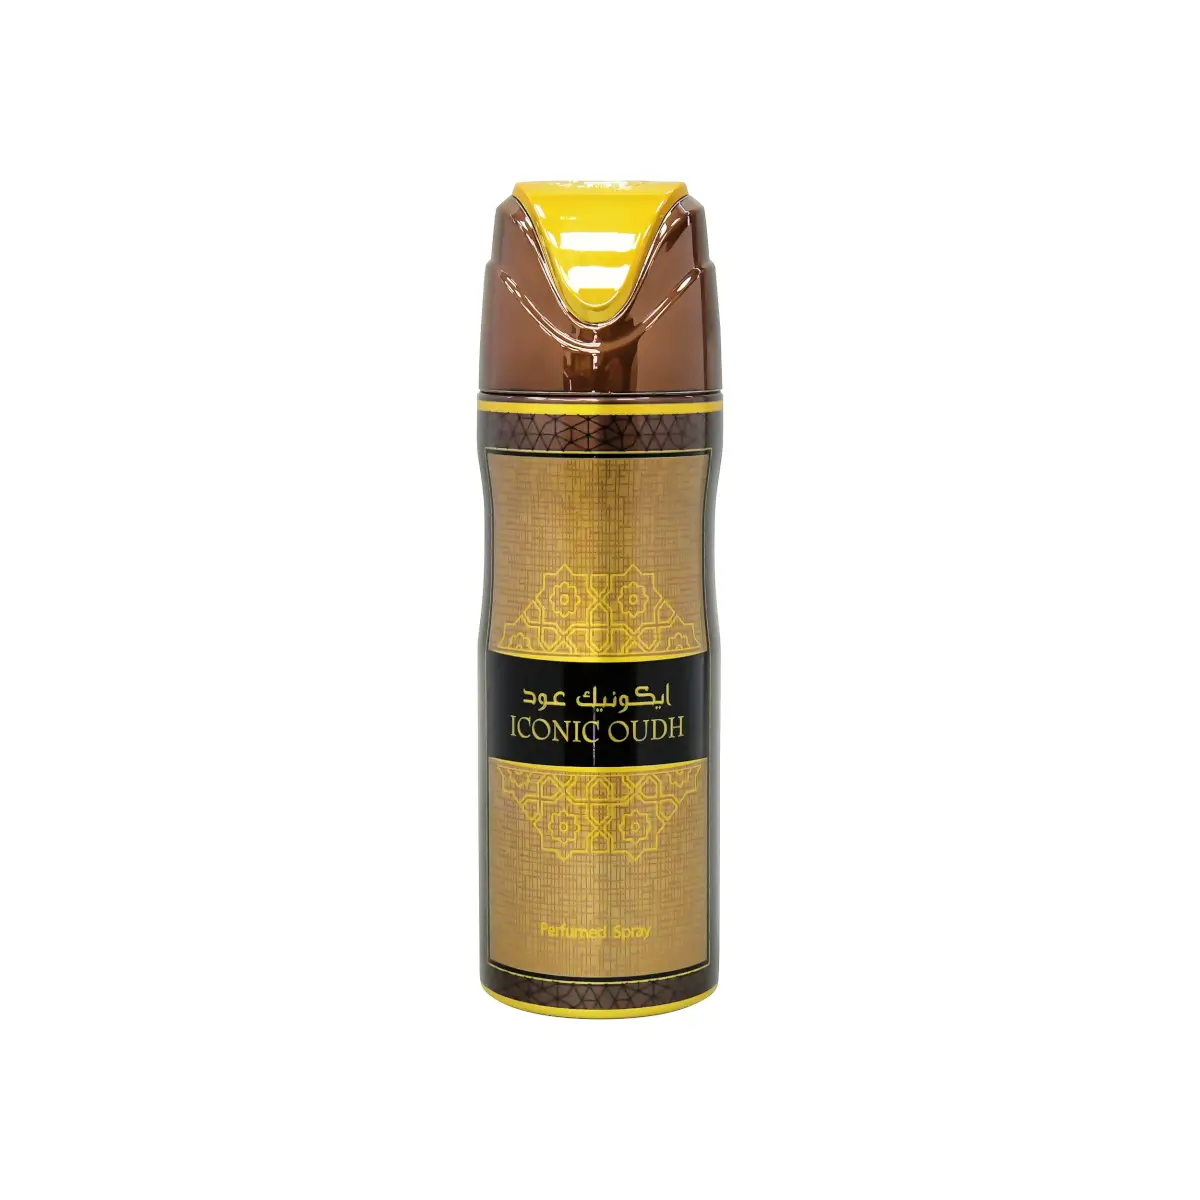 Iconic Oudh Perfumed Spray 200Ml By Lattafa